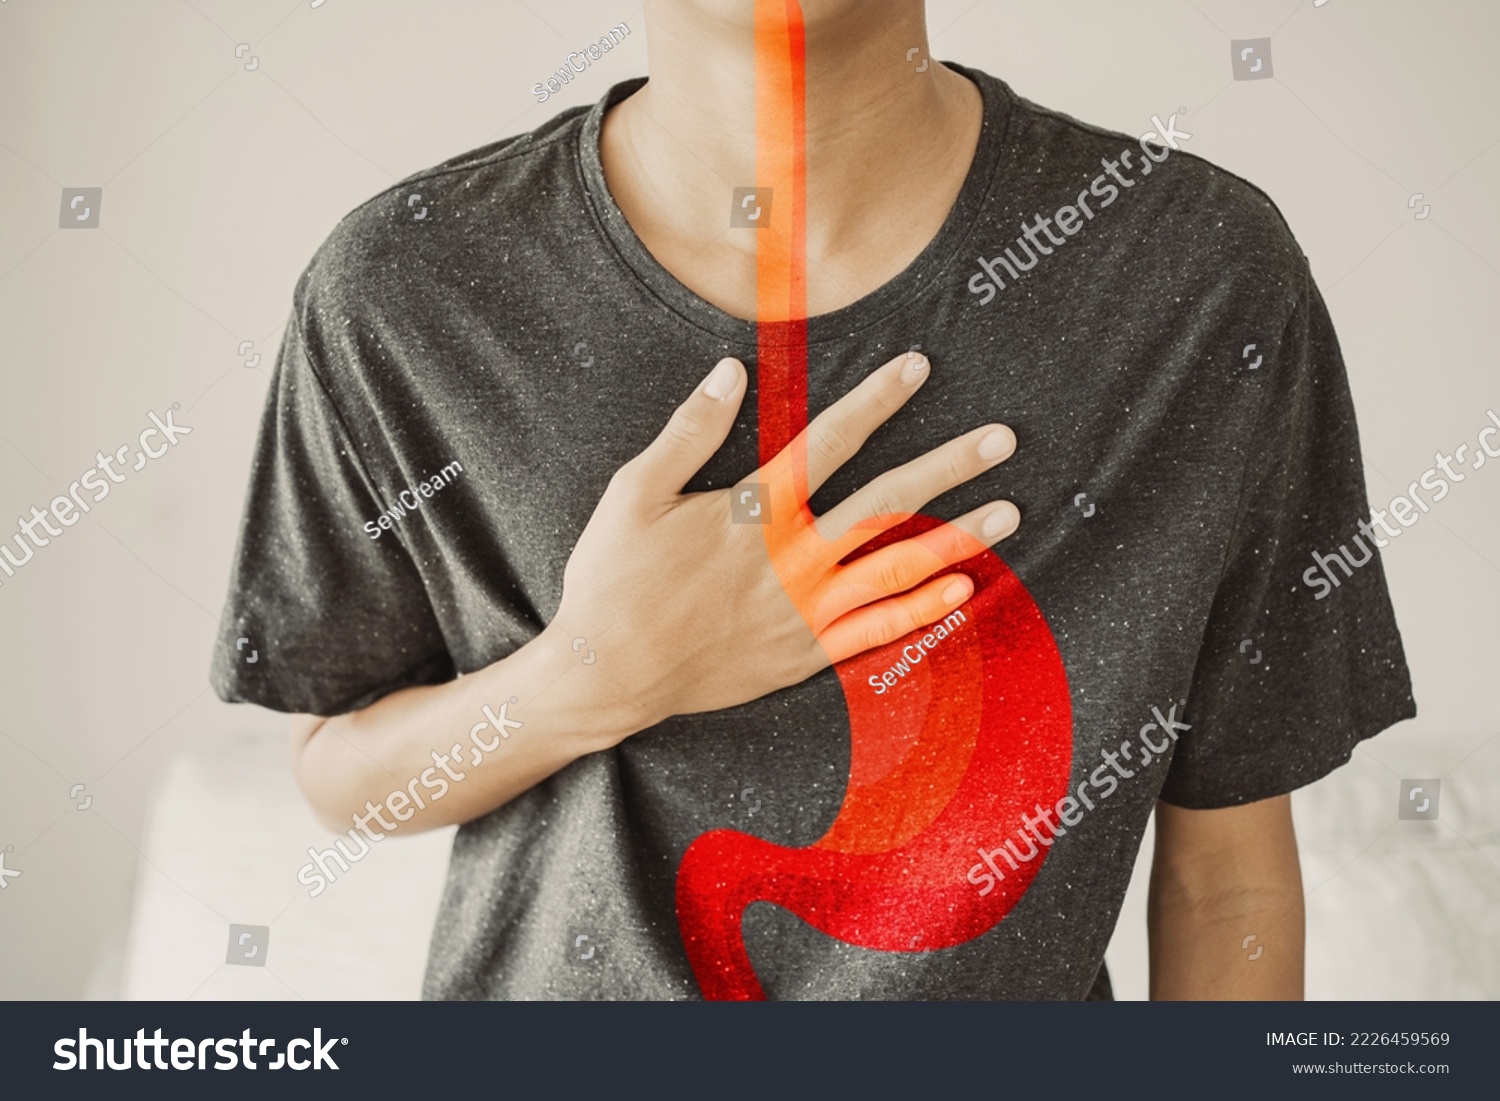 Young man having  heartburn, Gastroesophageal reflux disease (GERD) or acid reflux symptom, health care concept #2226459569